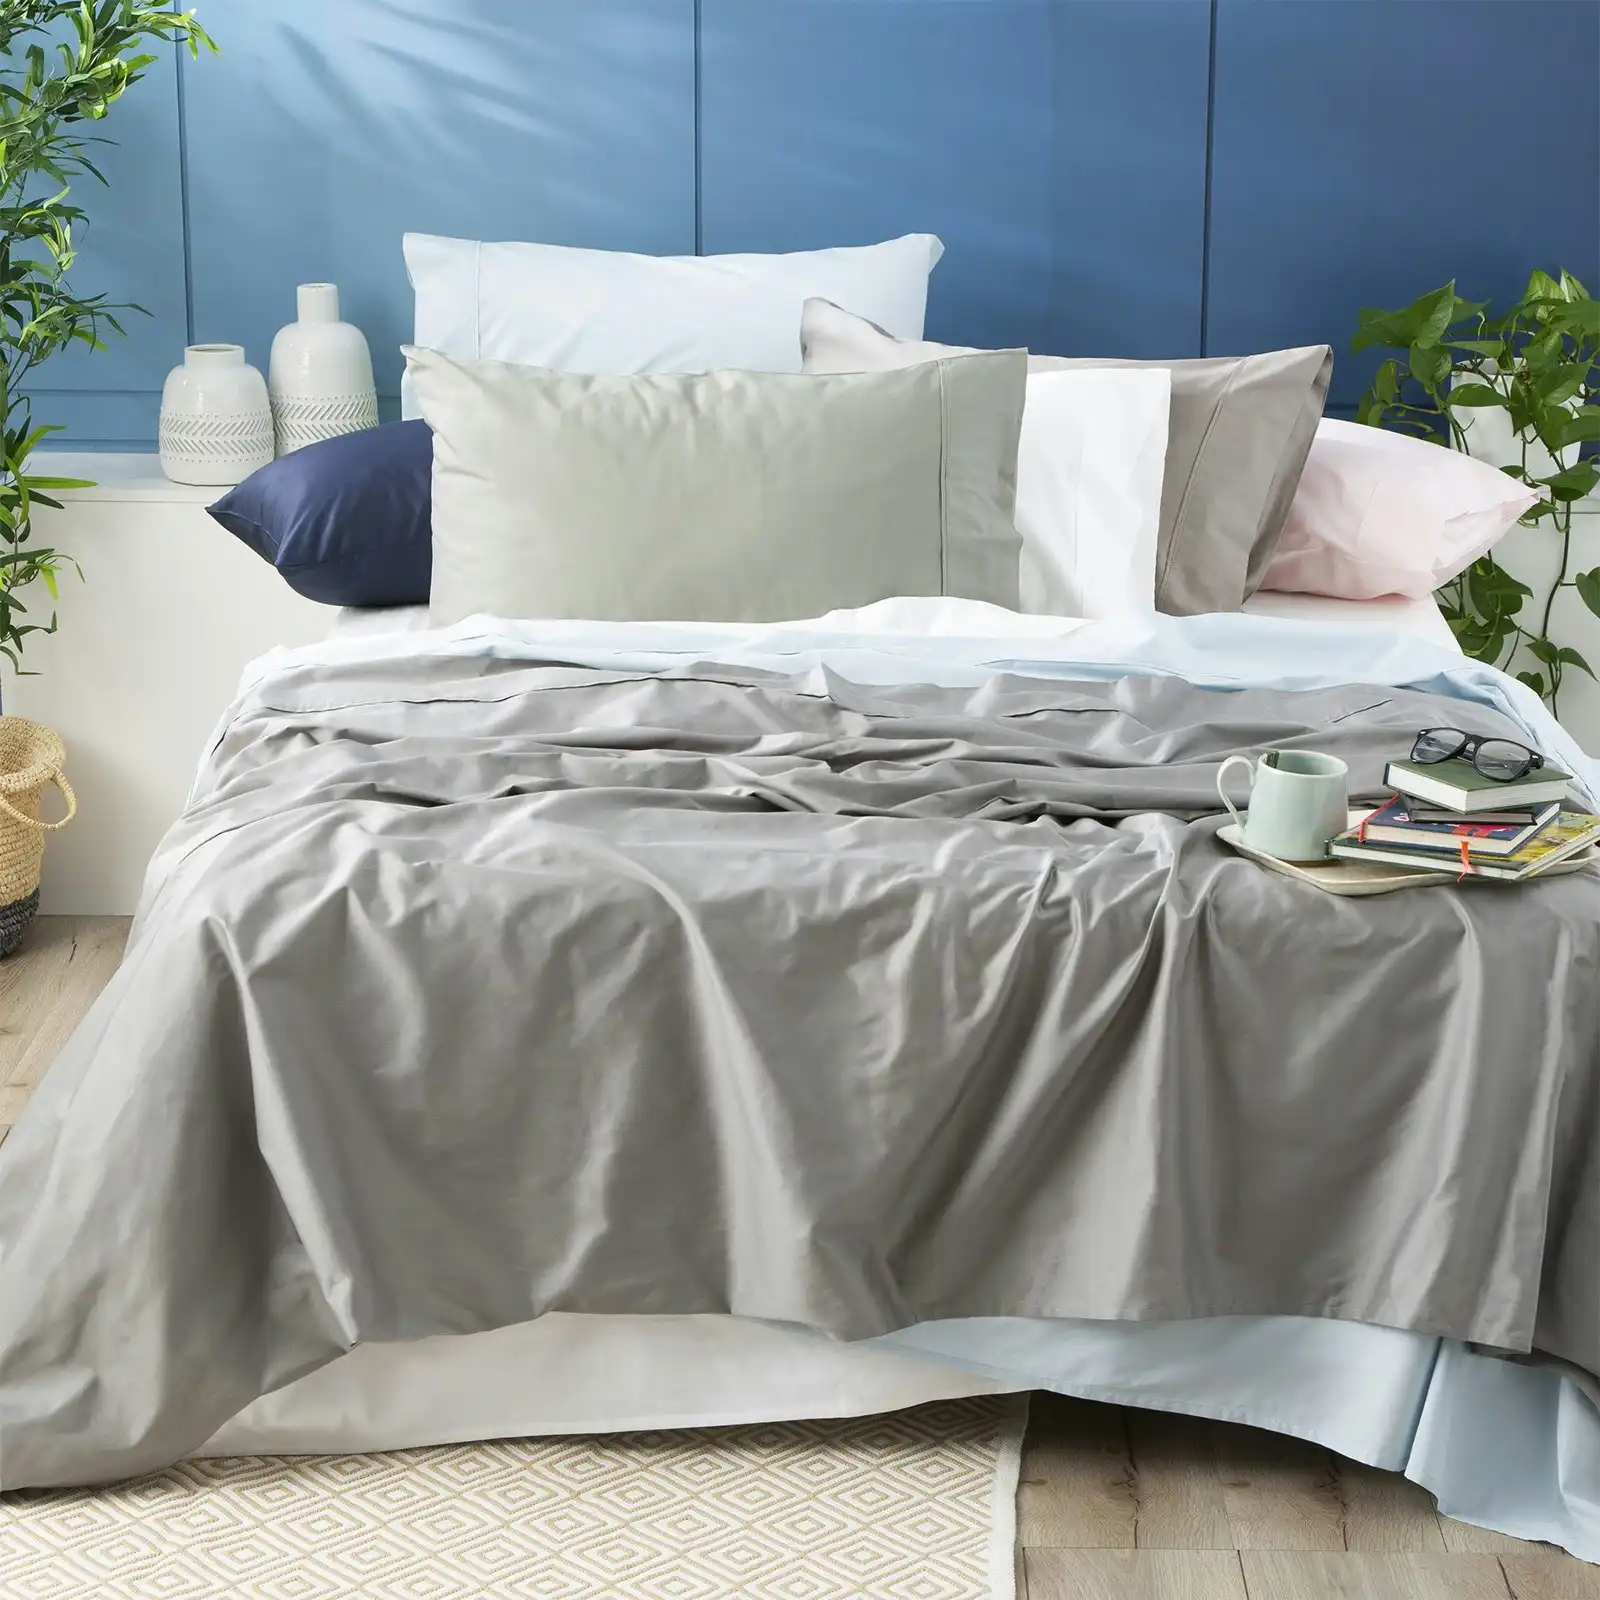 Park Avenue Queen Bed Sheet/Pillowcases 500TC Bamboo Cotton Home Bedding White